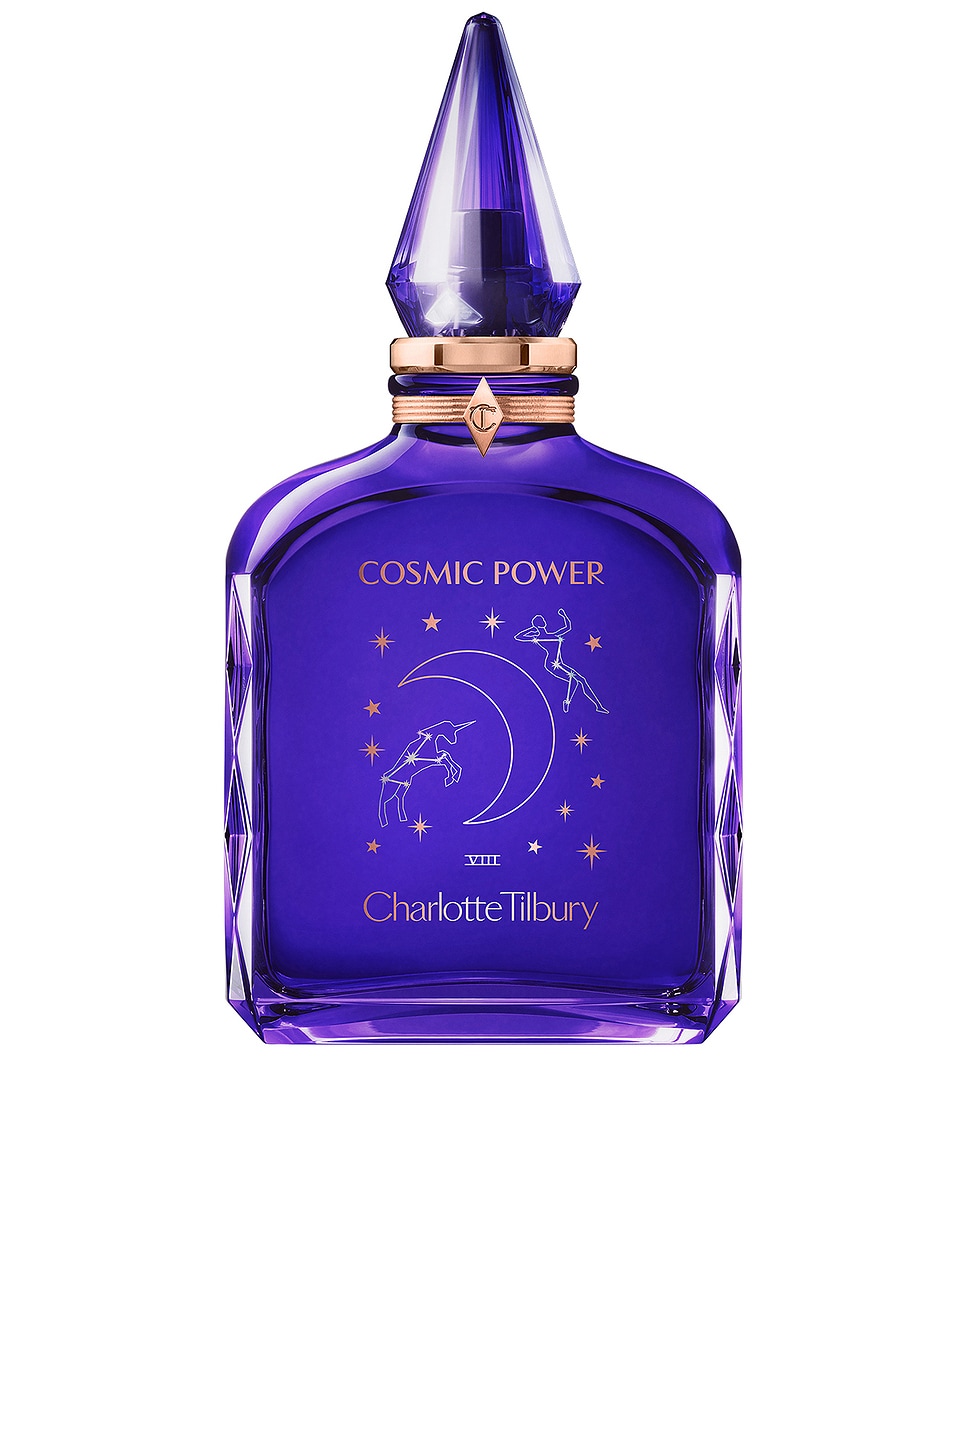 Cosmic Power Fragrance in Beauty: NA